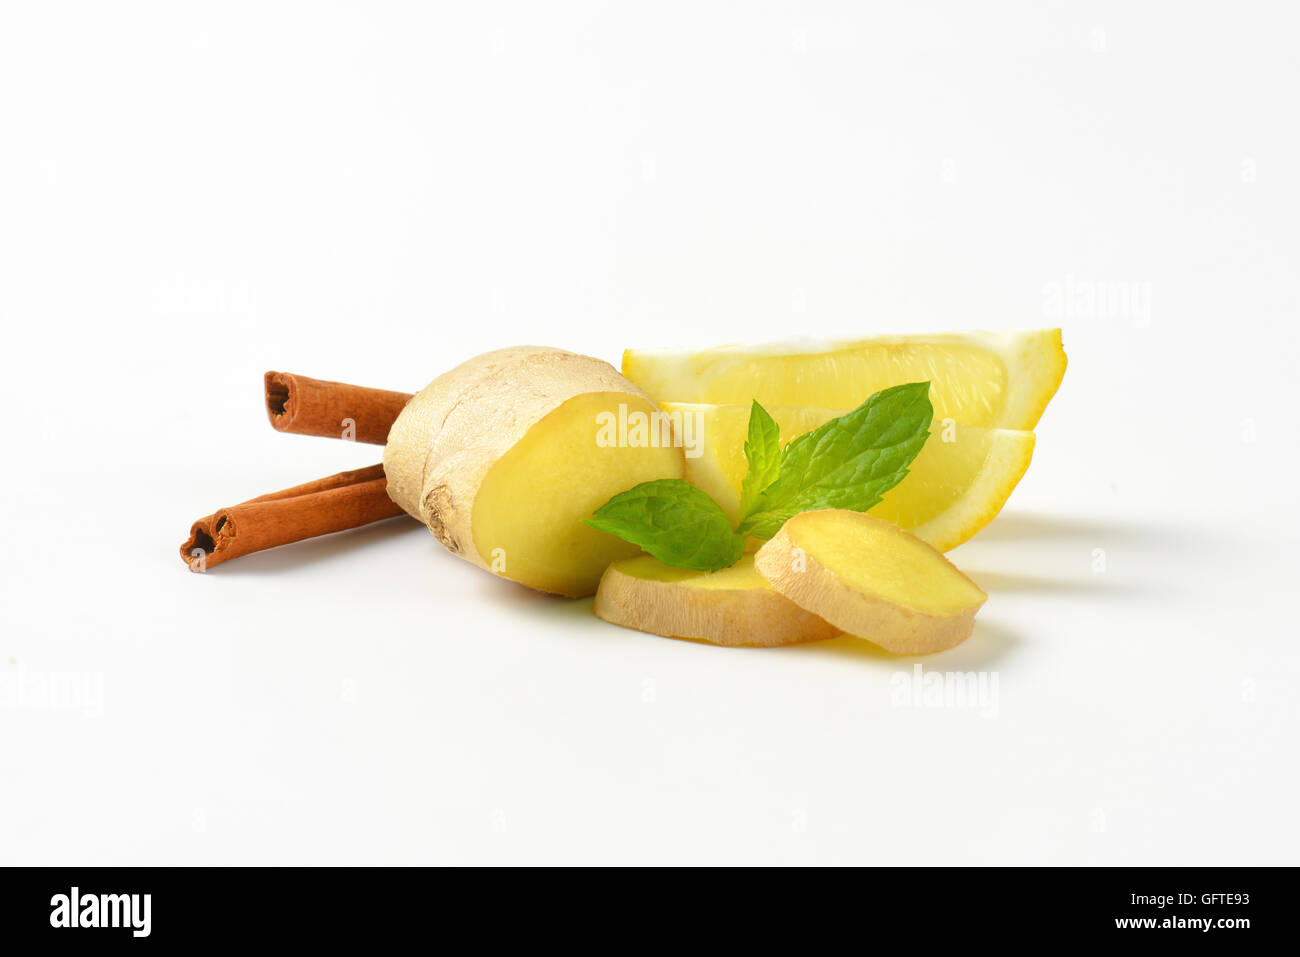 sliced ginger with lemon and cinnamon sticks on white background Stock Photo